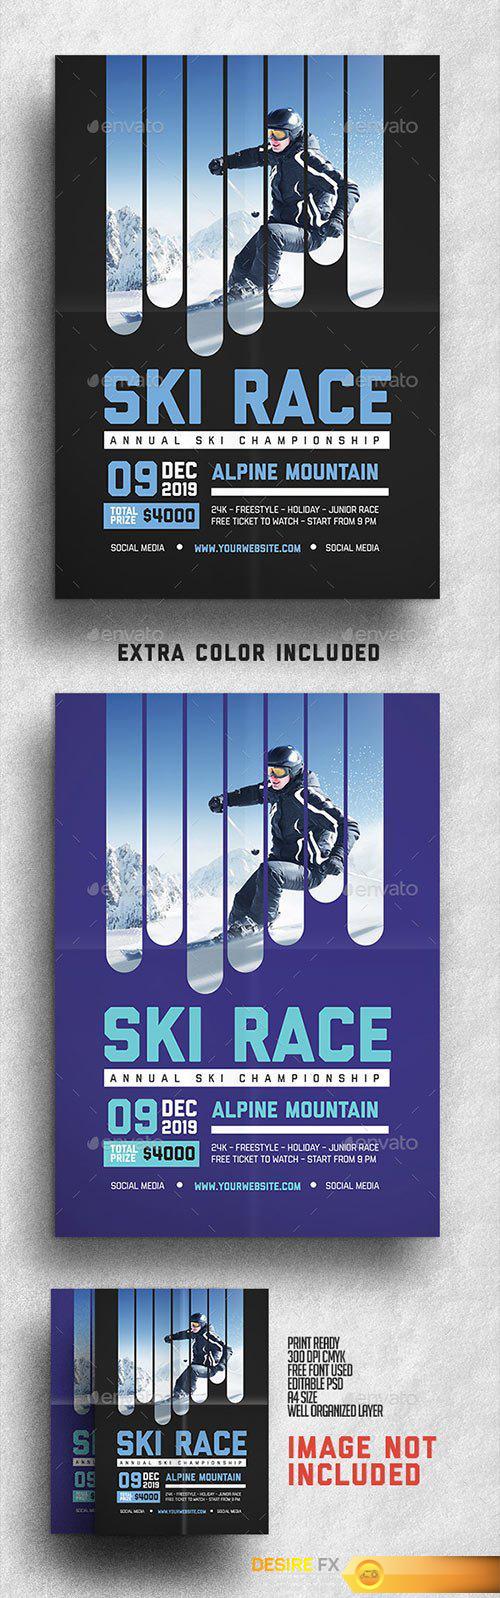 Graphicriver - Ski Race Flyer 18679743